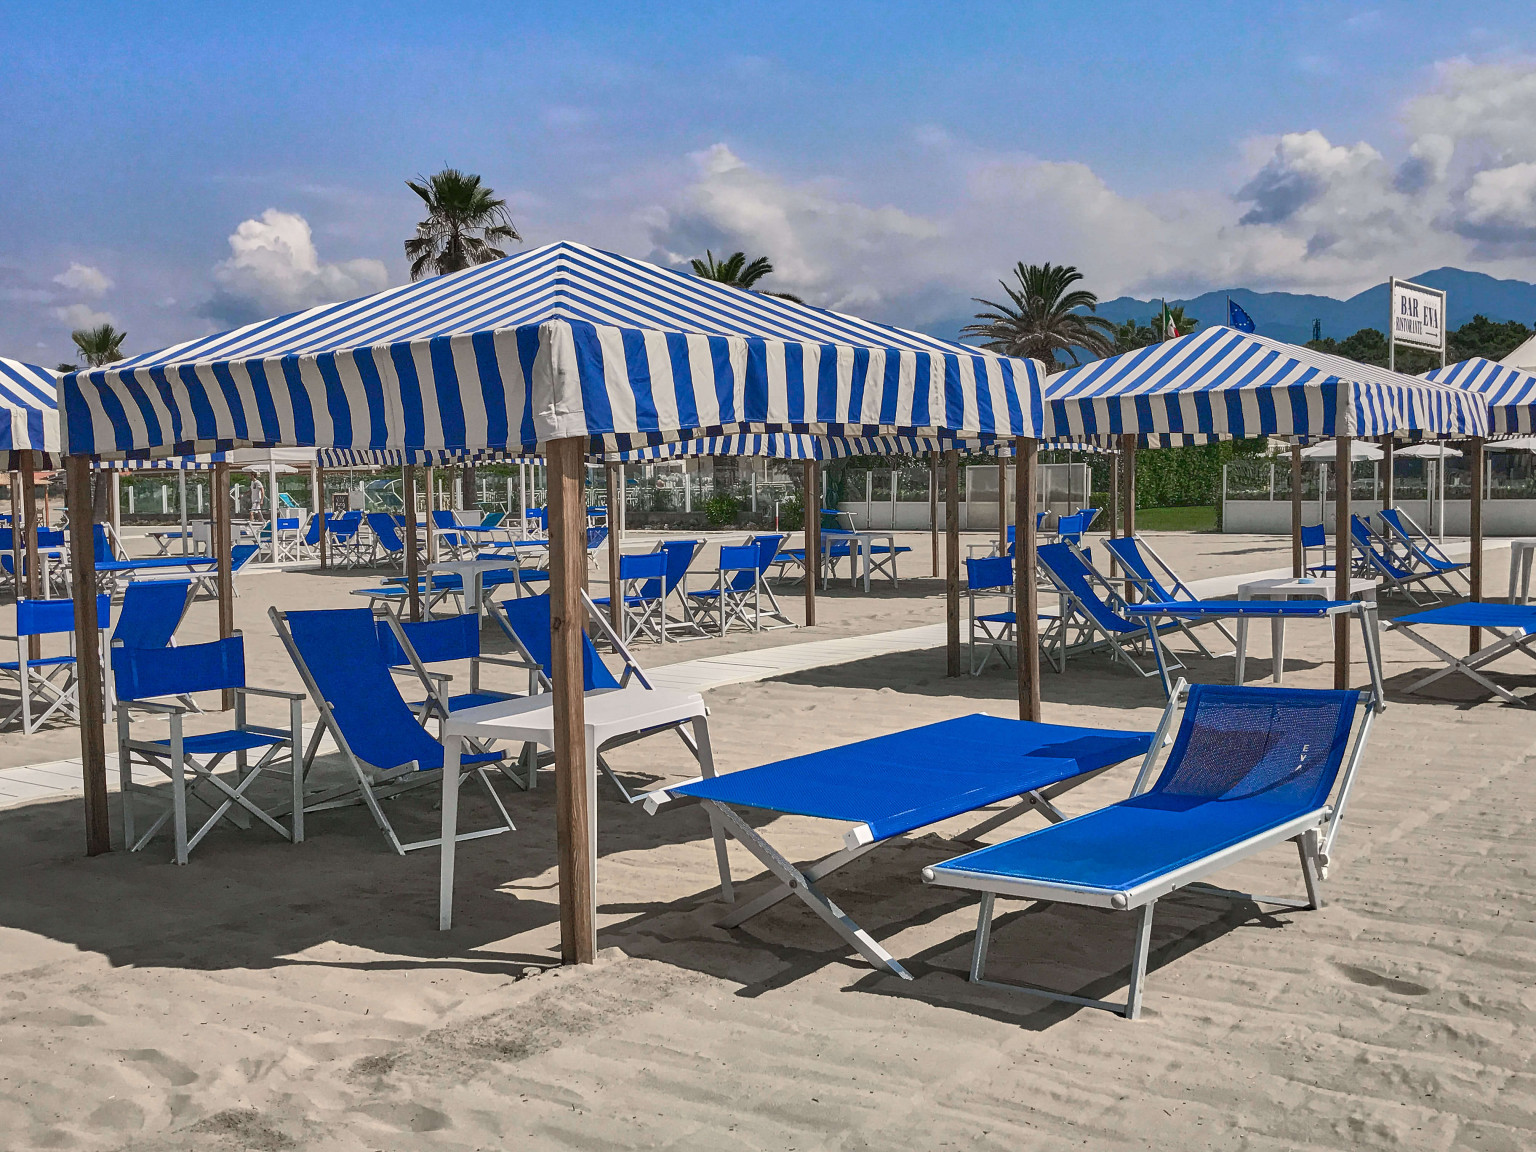 The Italian Beach Club, an Experience of Italian Culture and Lifestyle ...